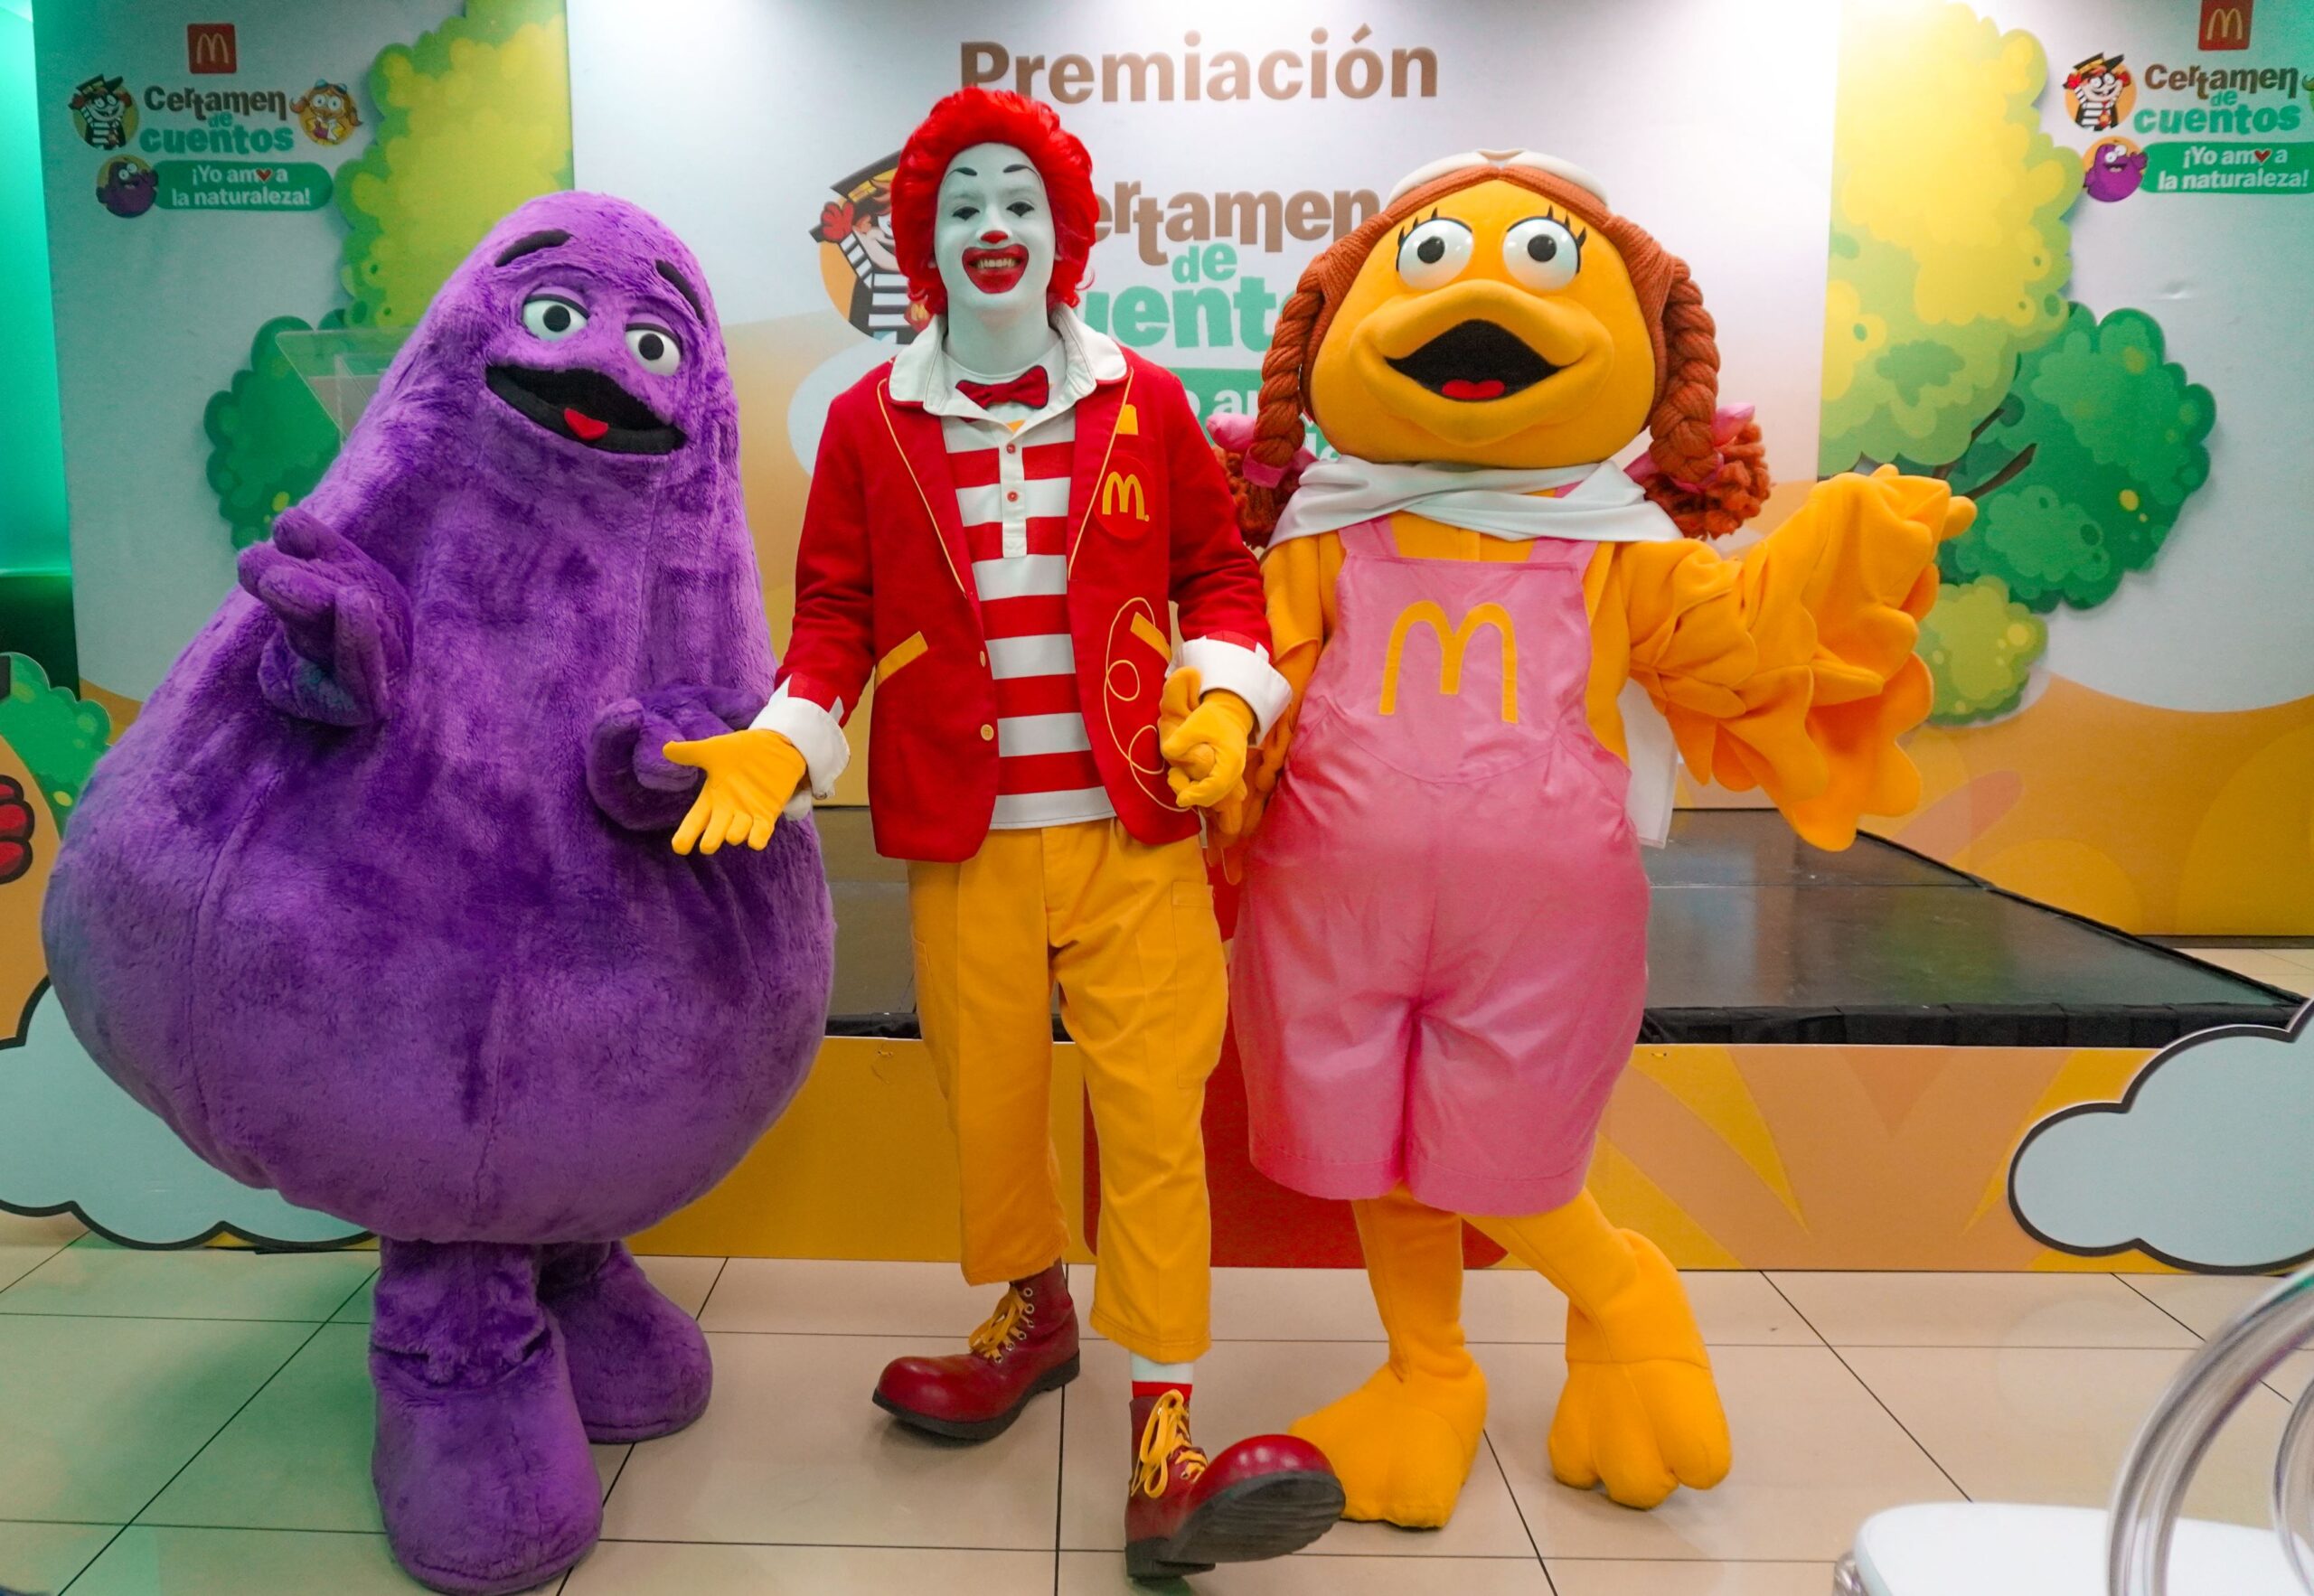 McDonald’s premia a ganadores del<br>X Certamen de Cuentos “Yo Amo a la Naturaleza”